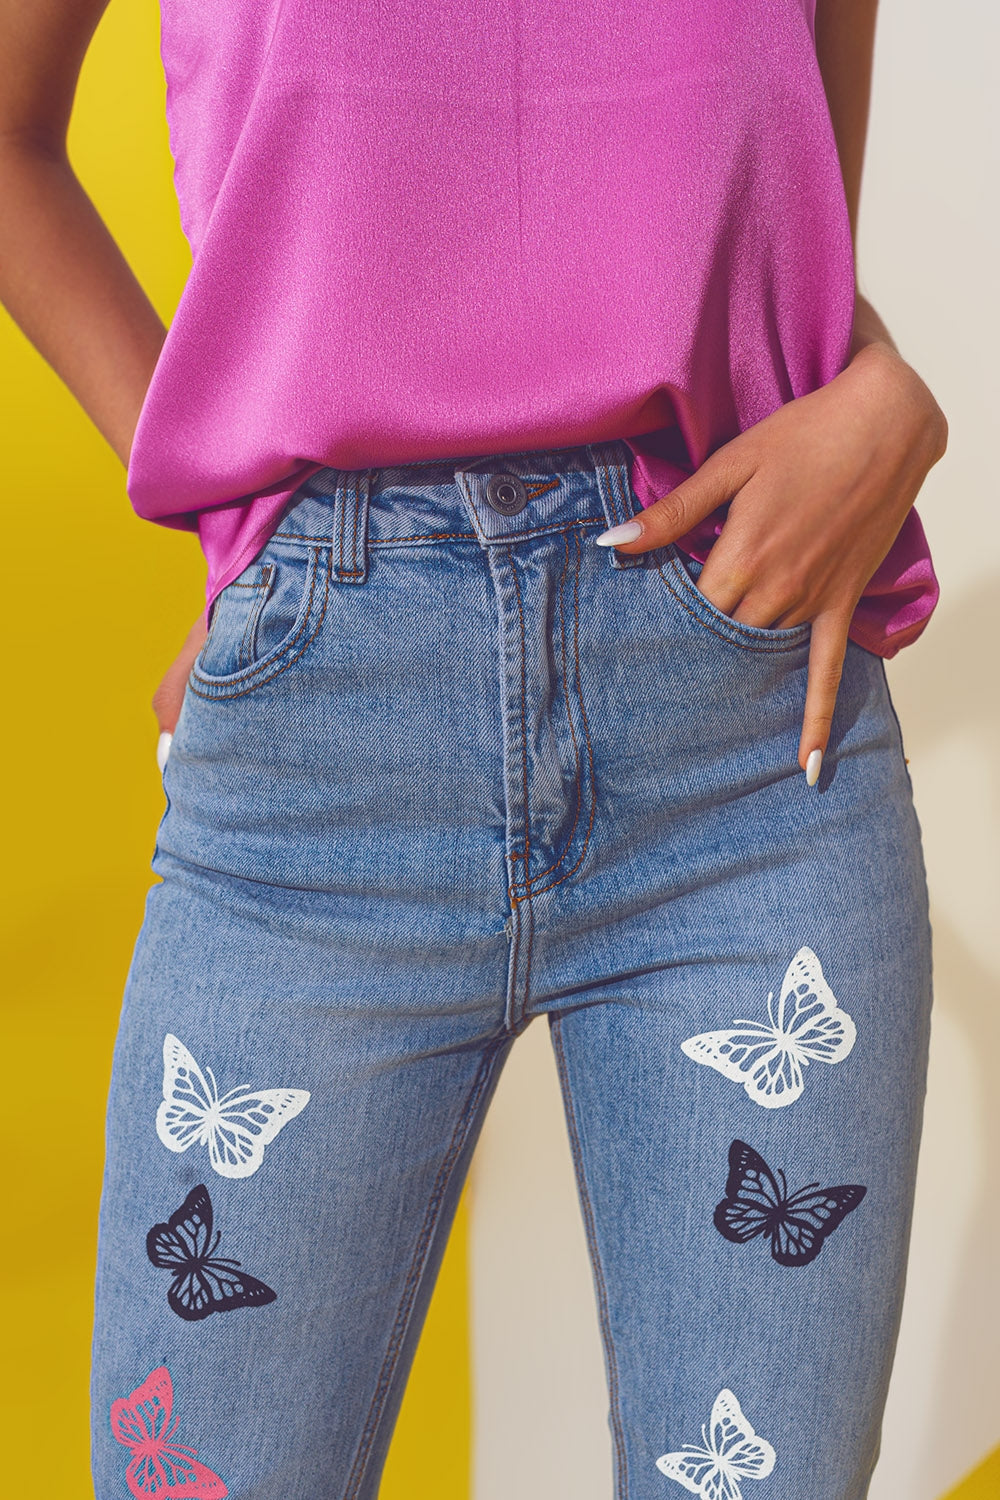 Butterfly Detail Skinny Jeans in Light Blue Wash